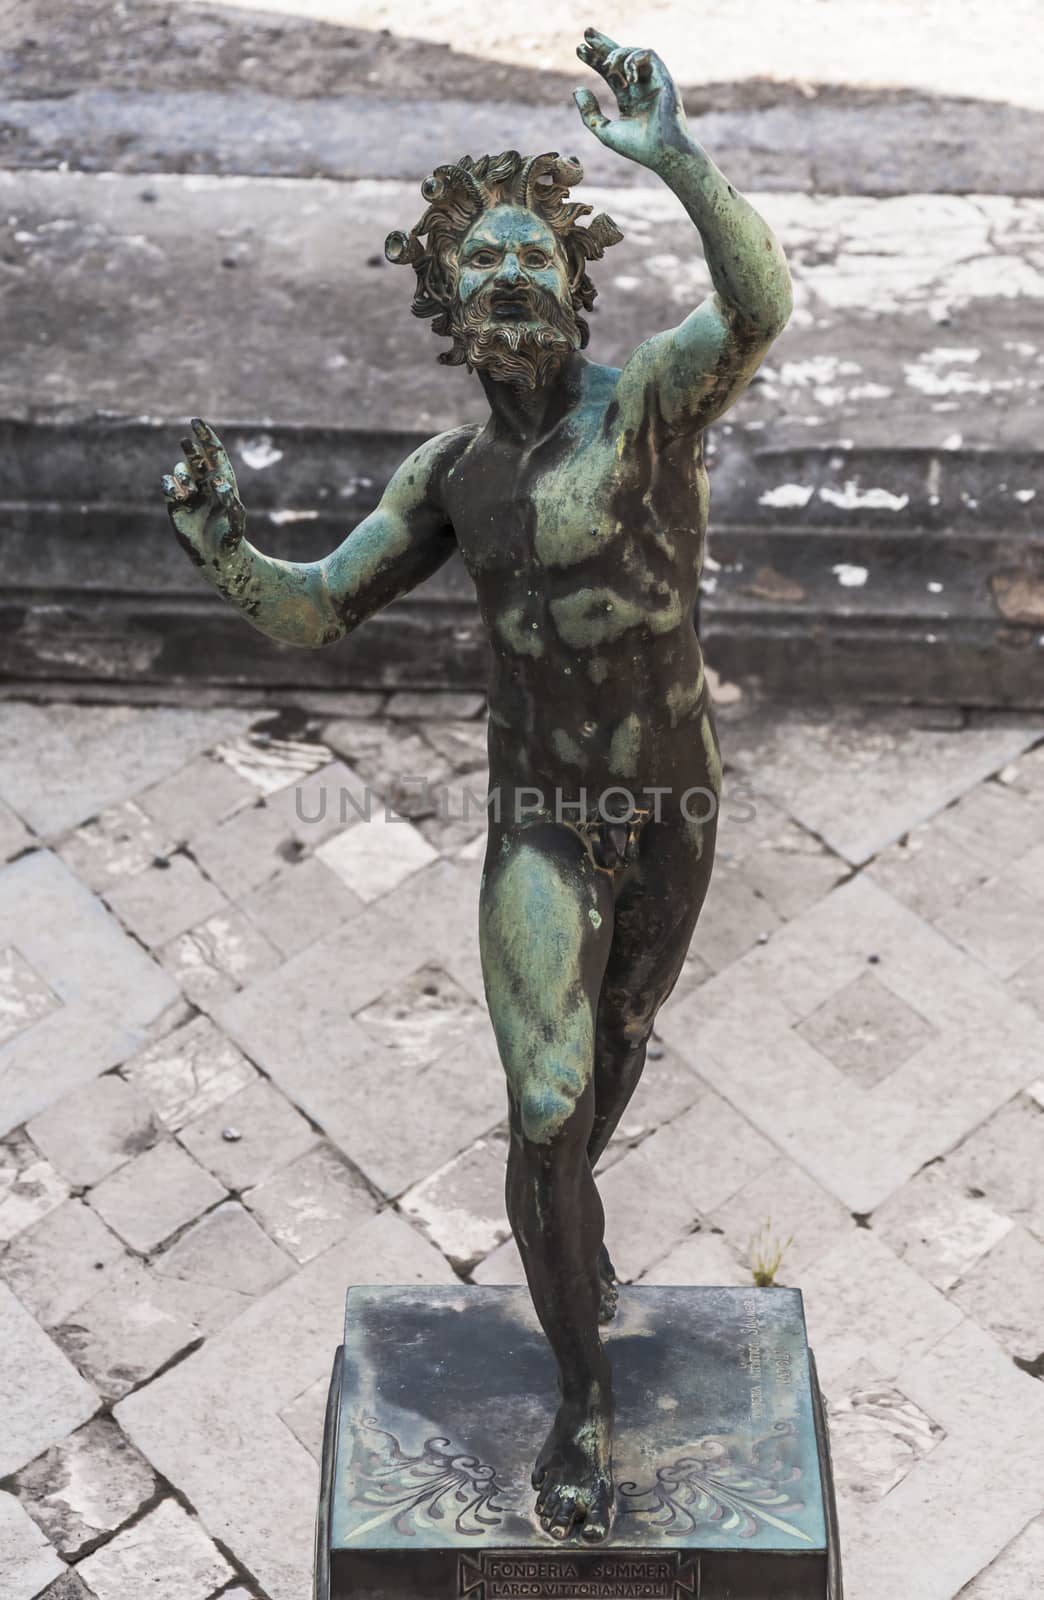 the Fauno bronze statue inside the pompeii ruins, italy